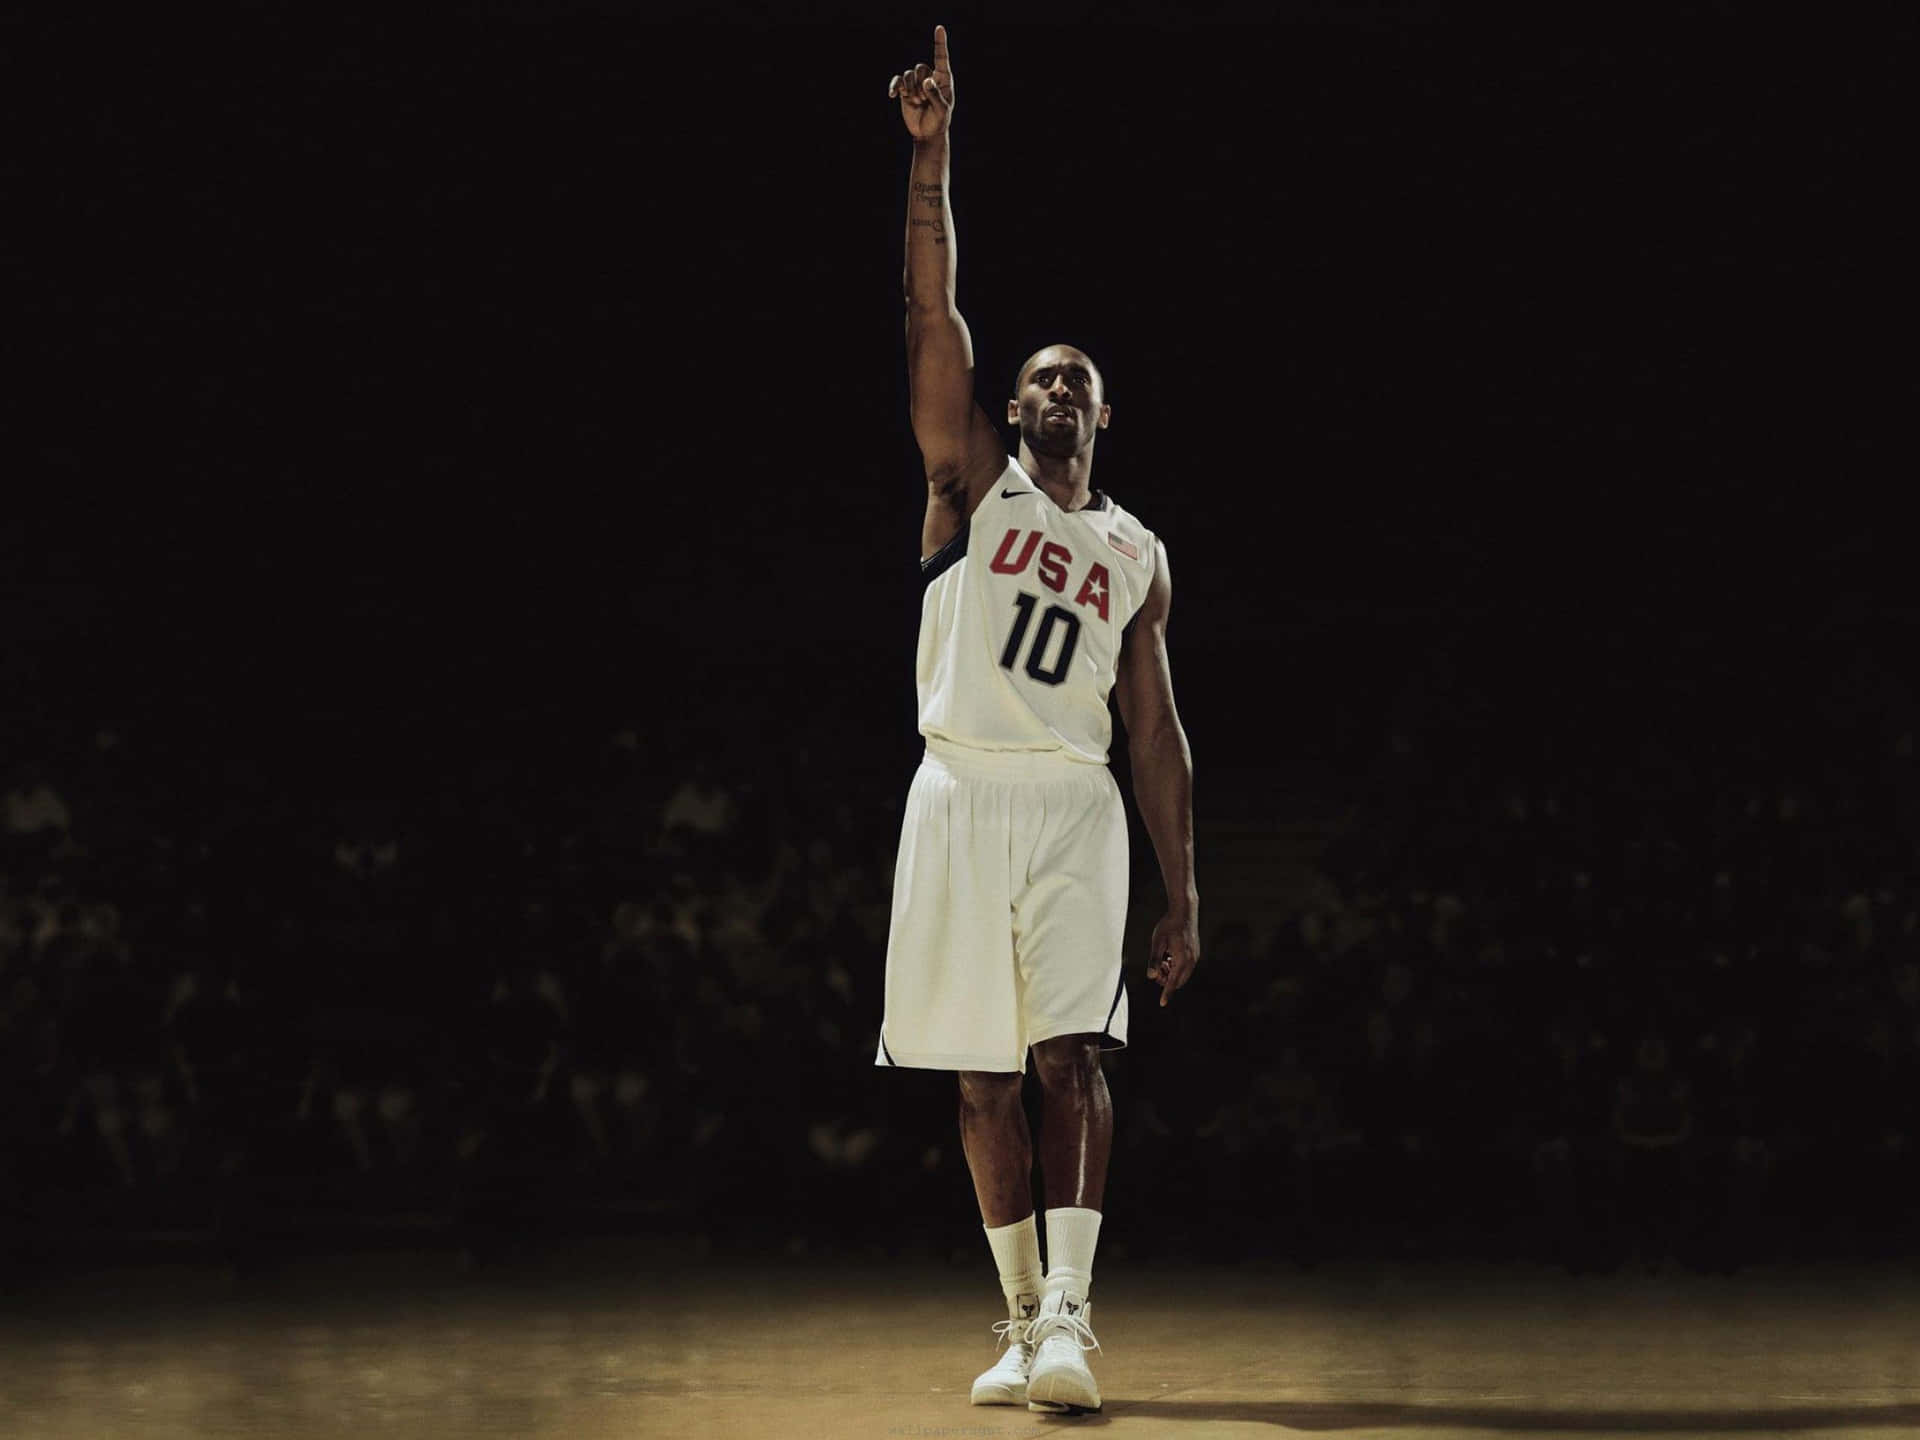 NBA-legenden Kobe Bryant - The Black Mamba Wallpaper